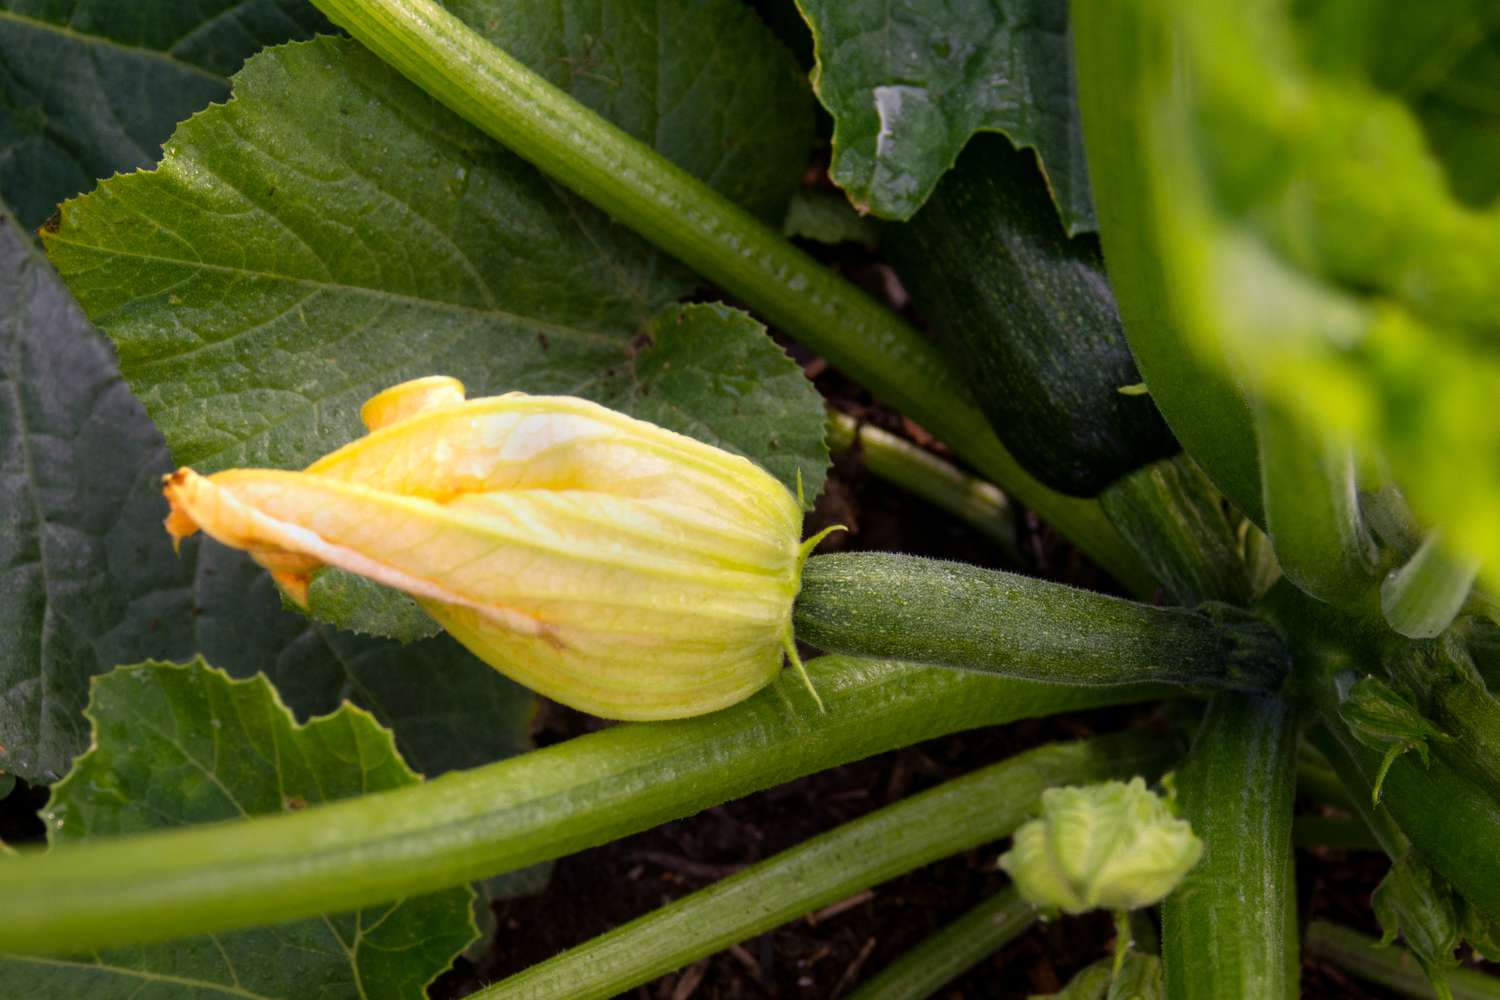 Zucchini plant stems with yellow flower bud closeup